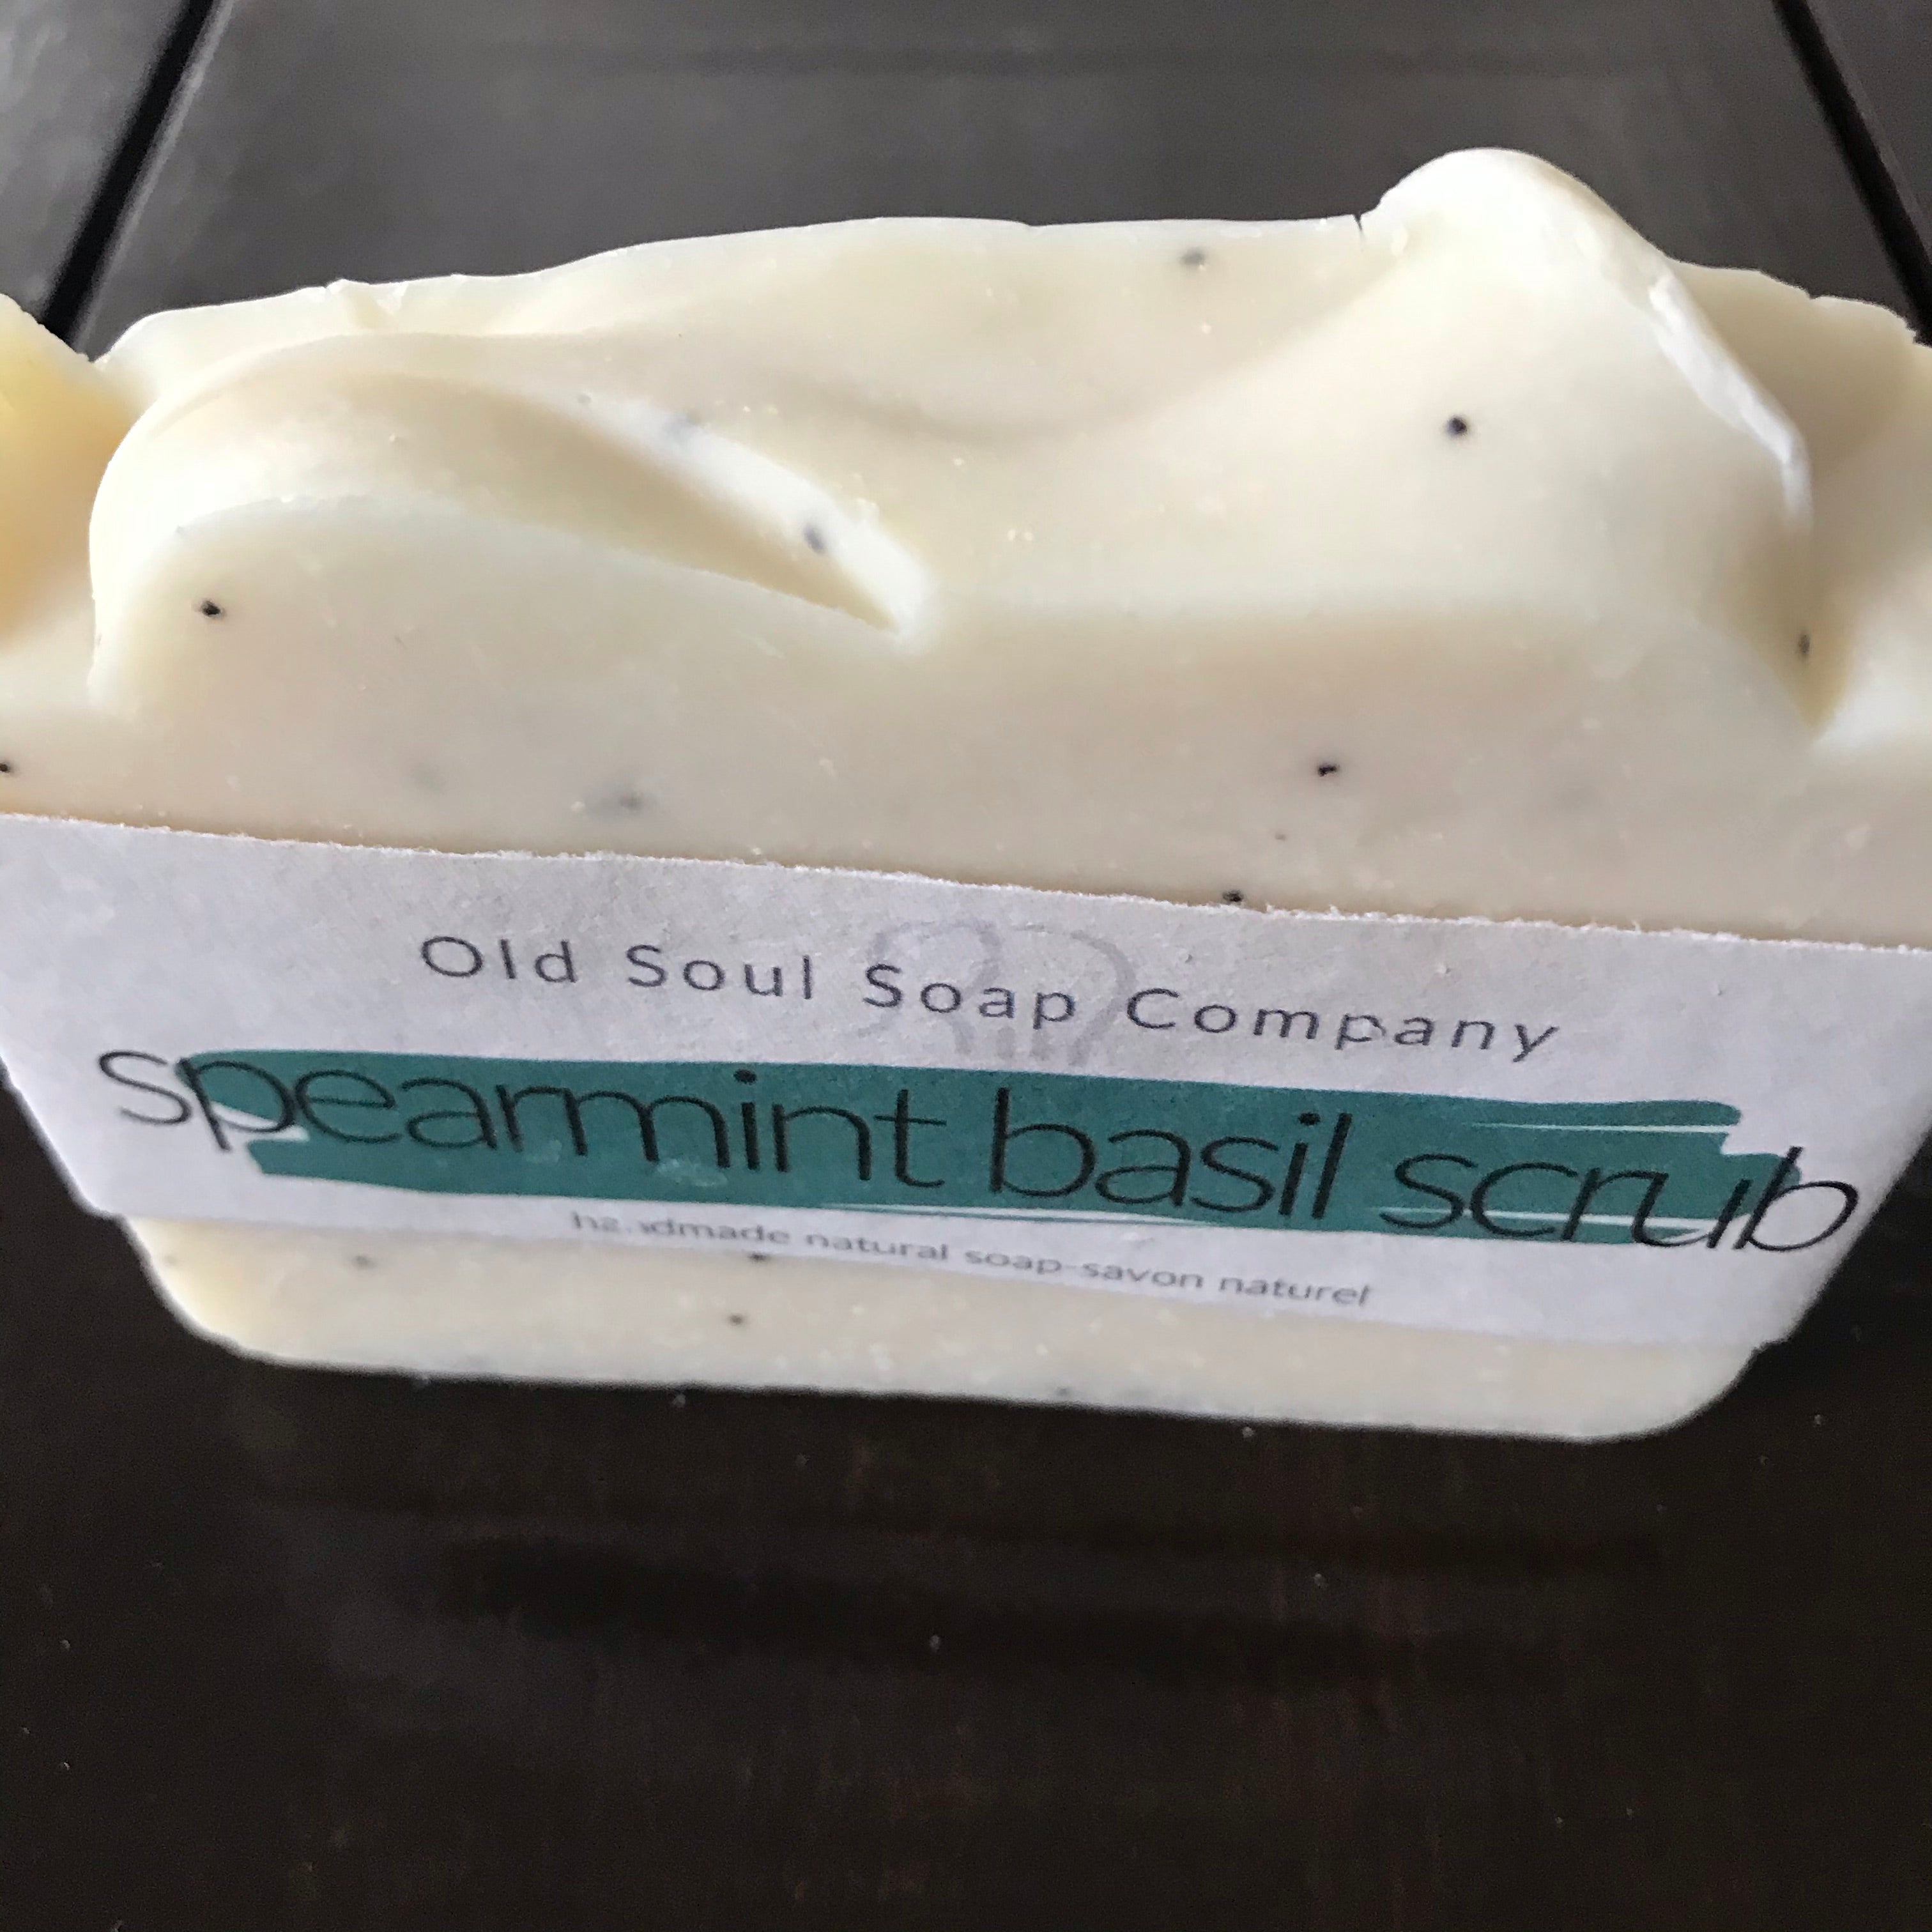 old soul soap company spearmint basil scrub soap made in canada